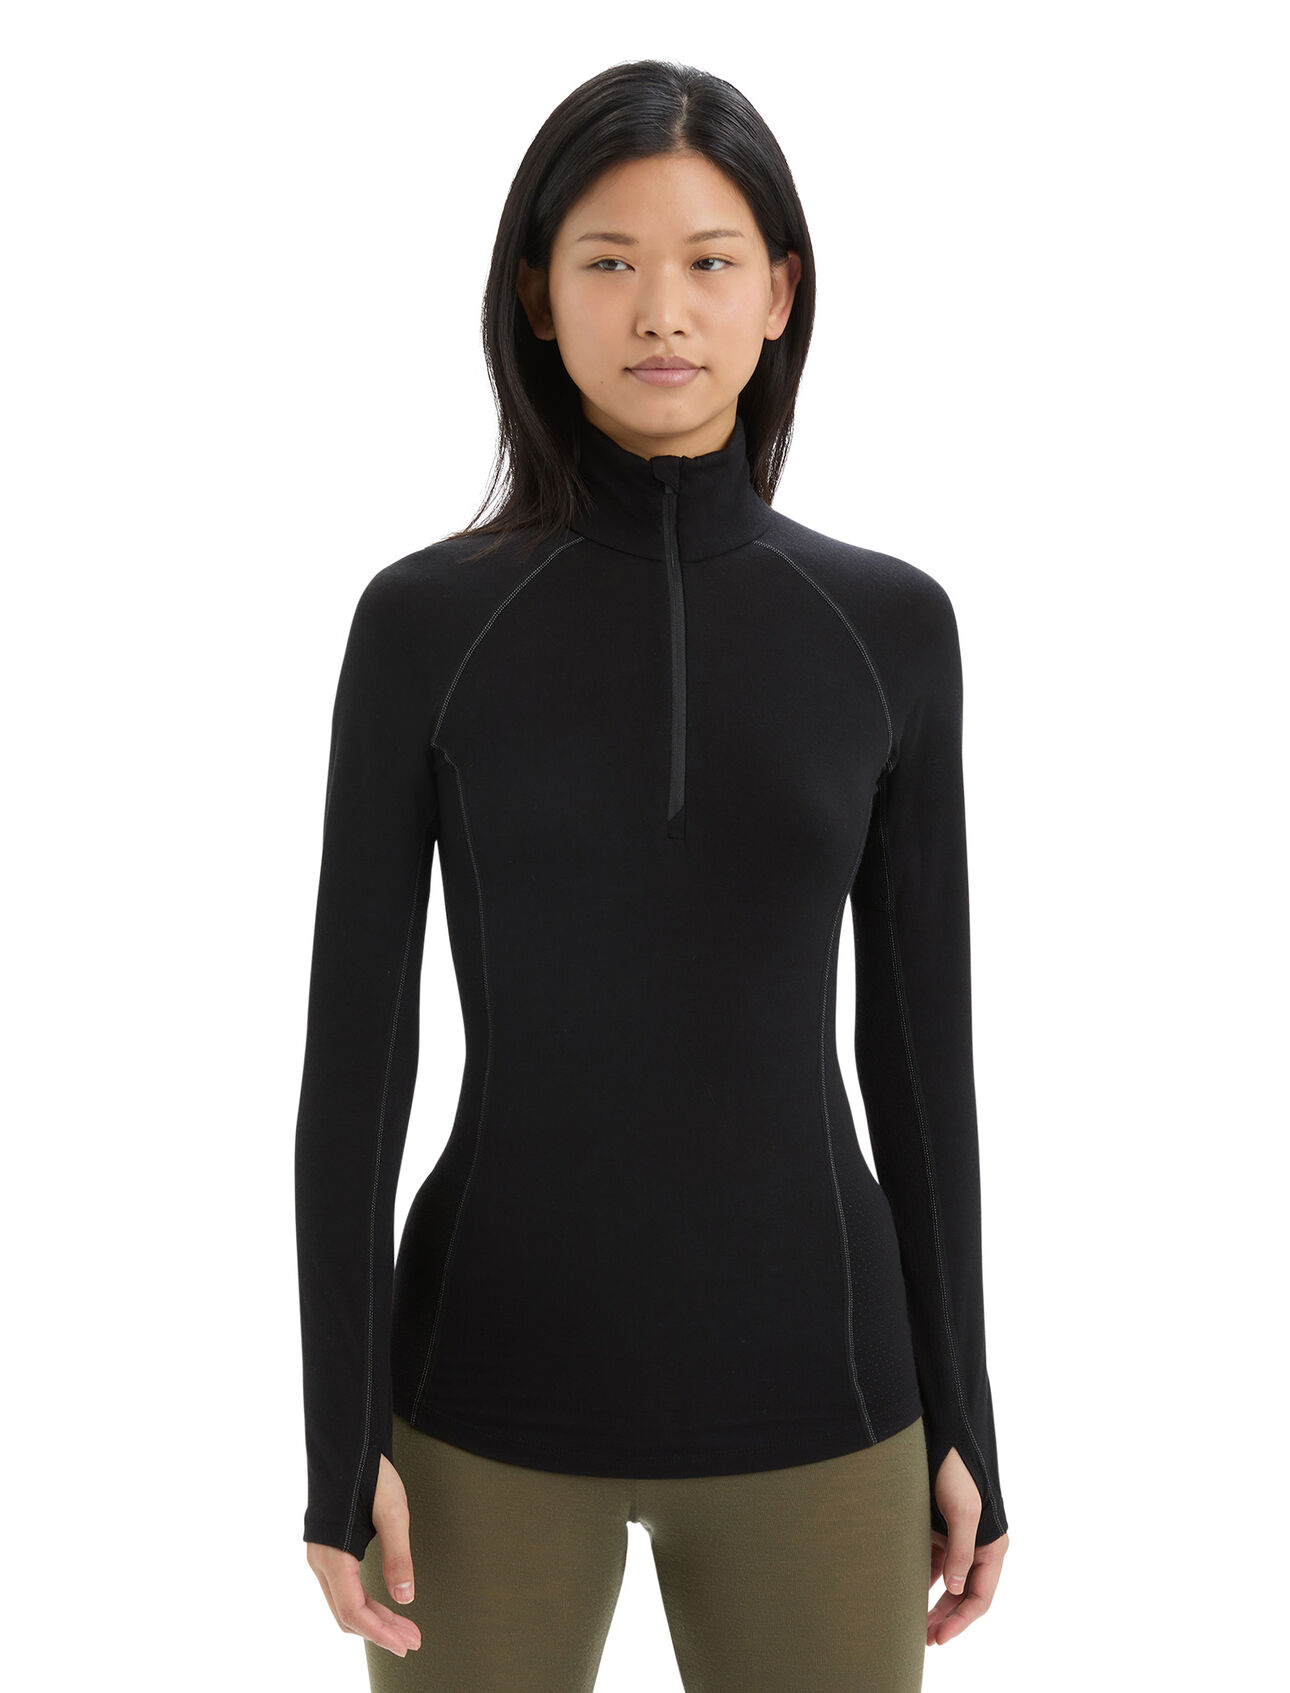 Women's BodyfitZone™ Merino 150 Zone Long Sleeve Half Zip Thermal Top